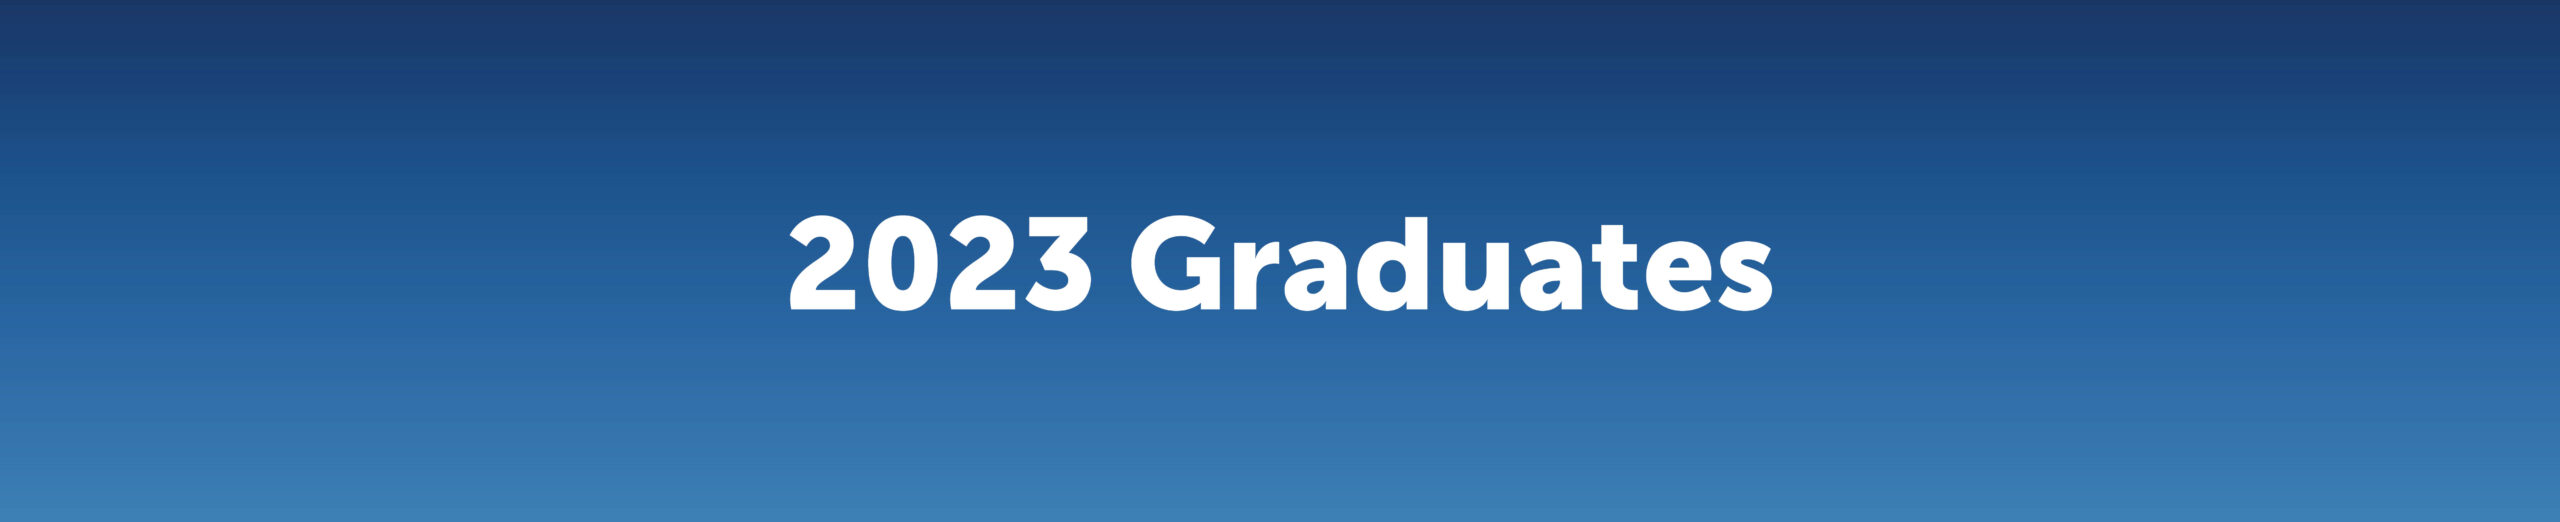 webpage headers - 2023 graduates